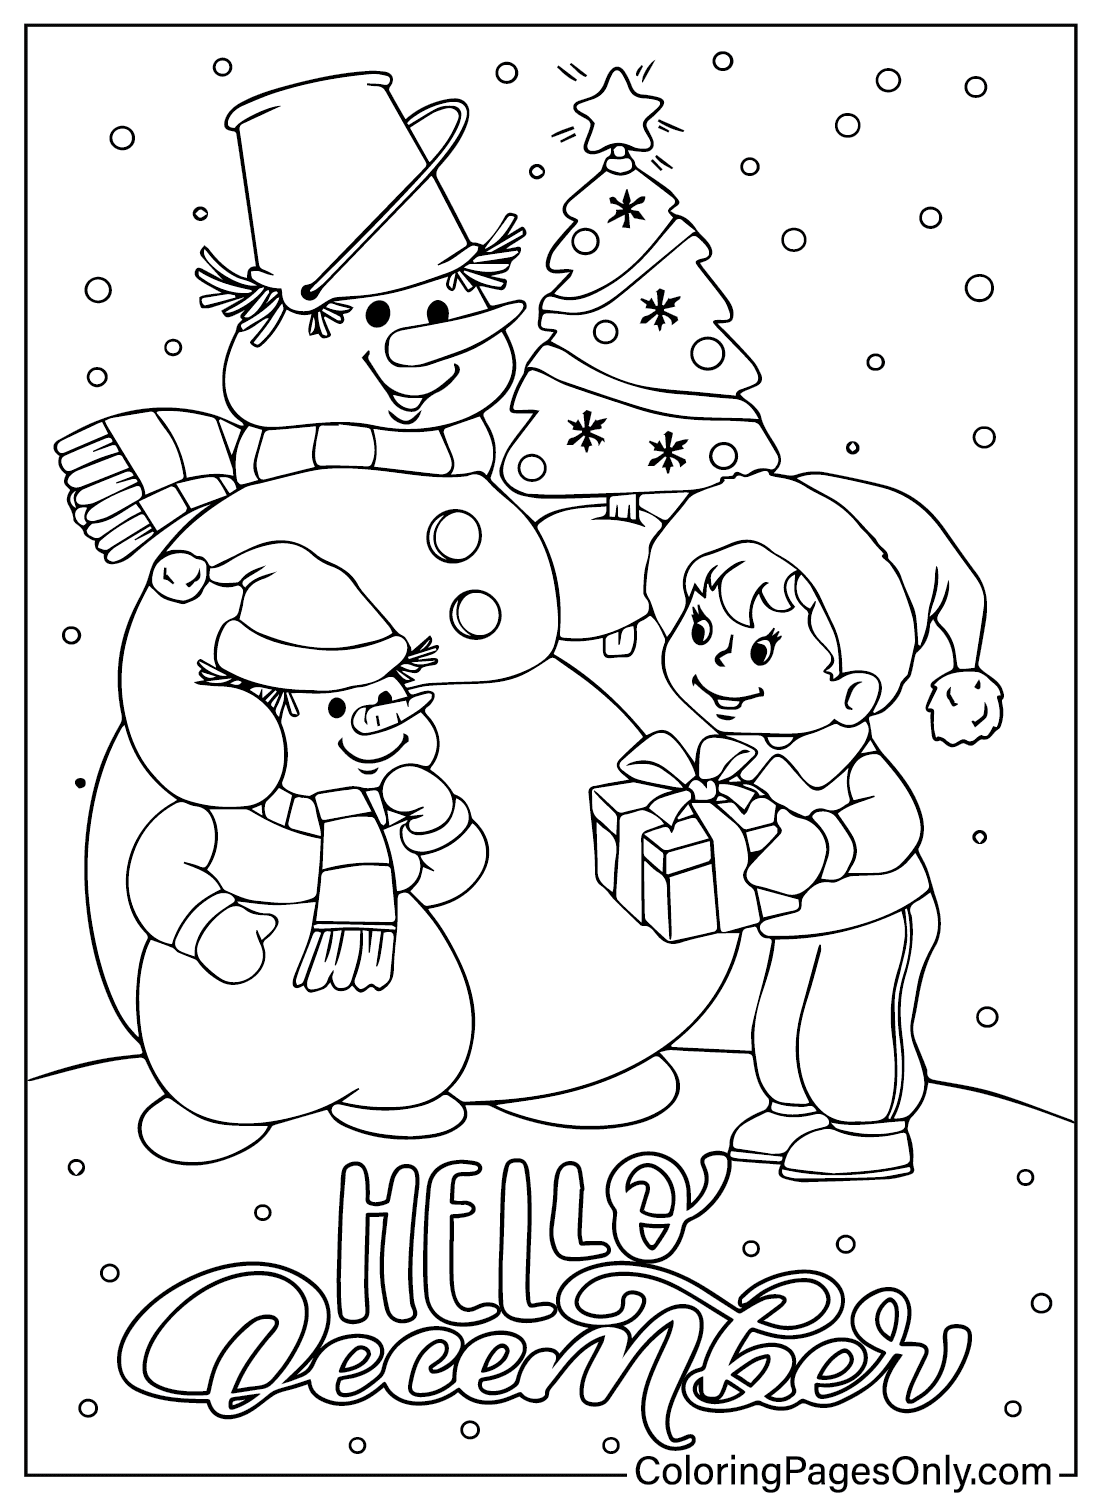 December Coloring Sheet for Kids